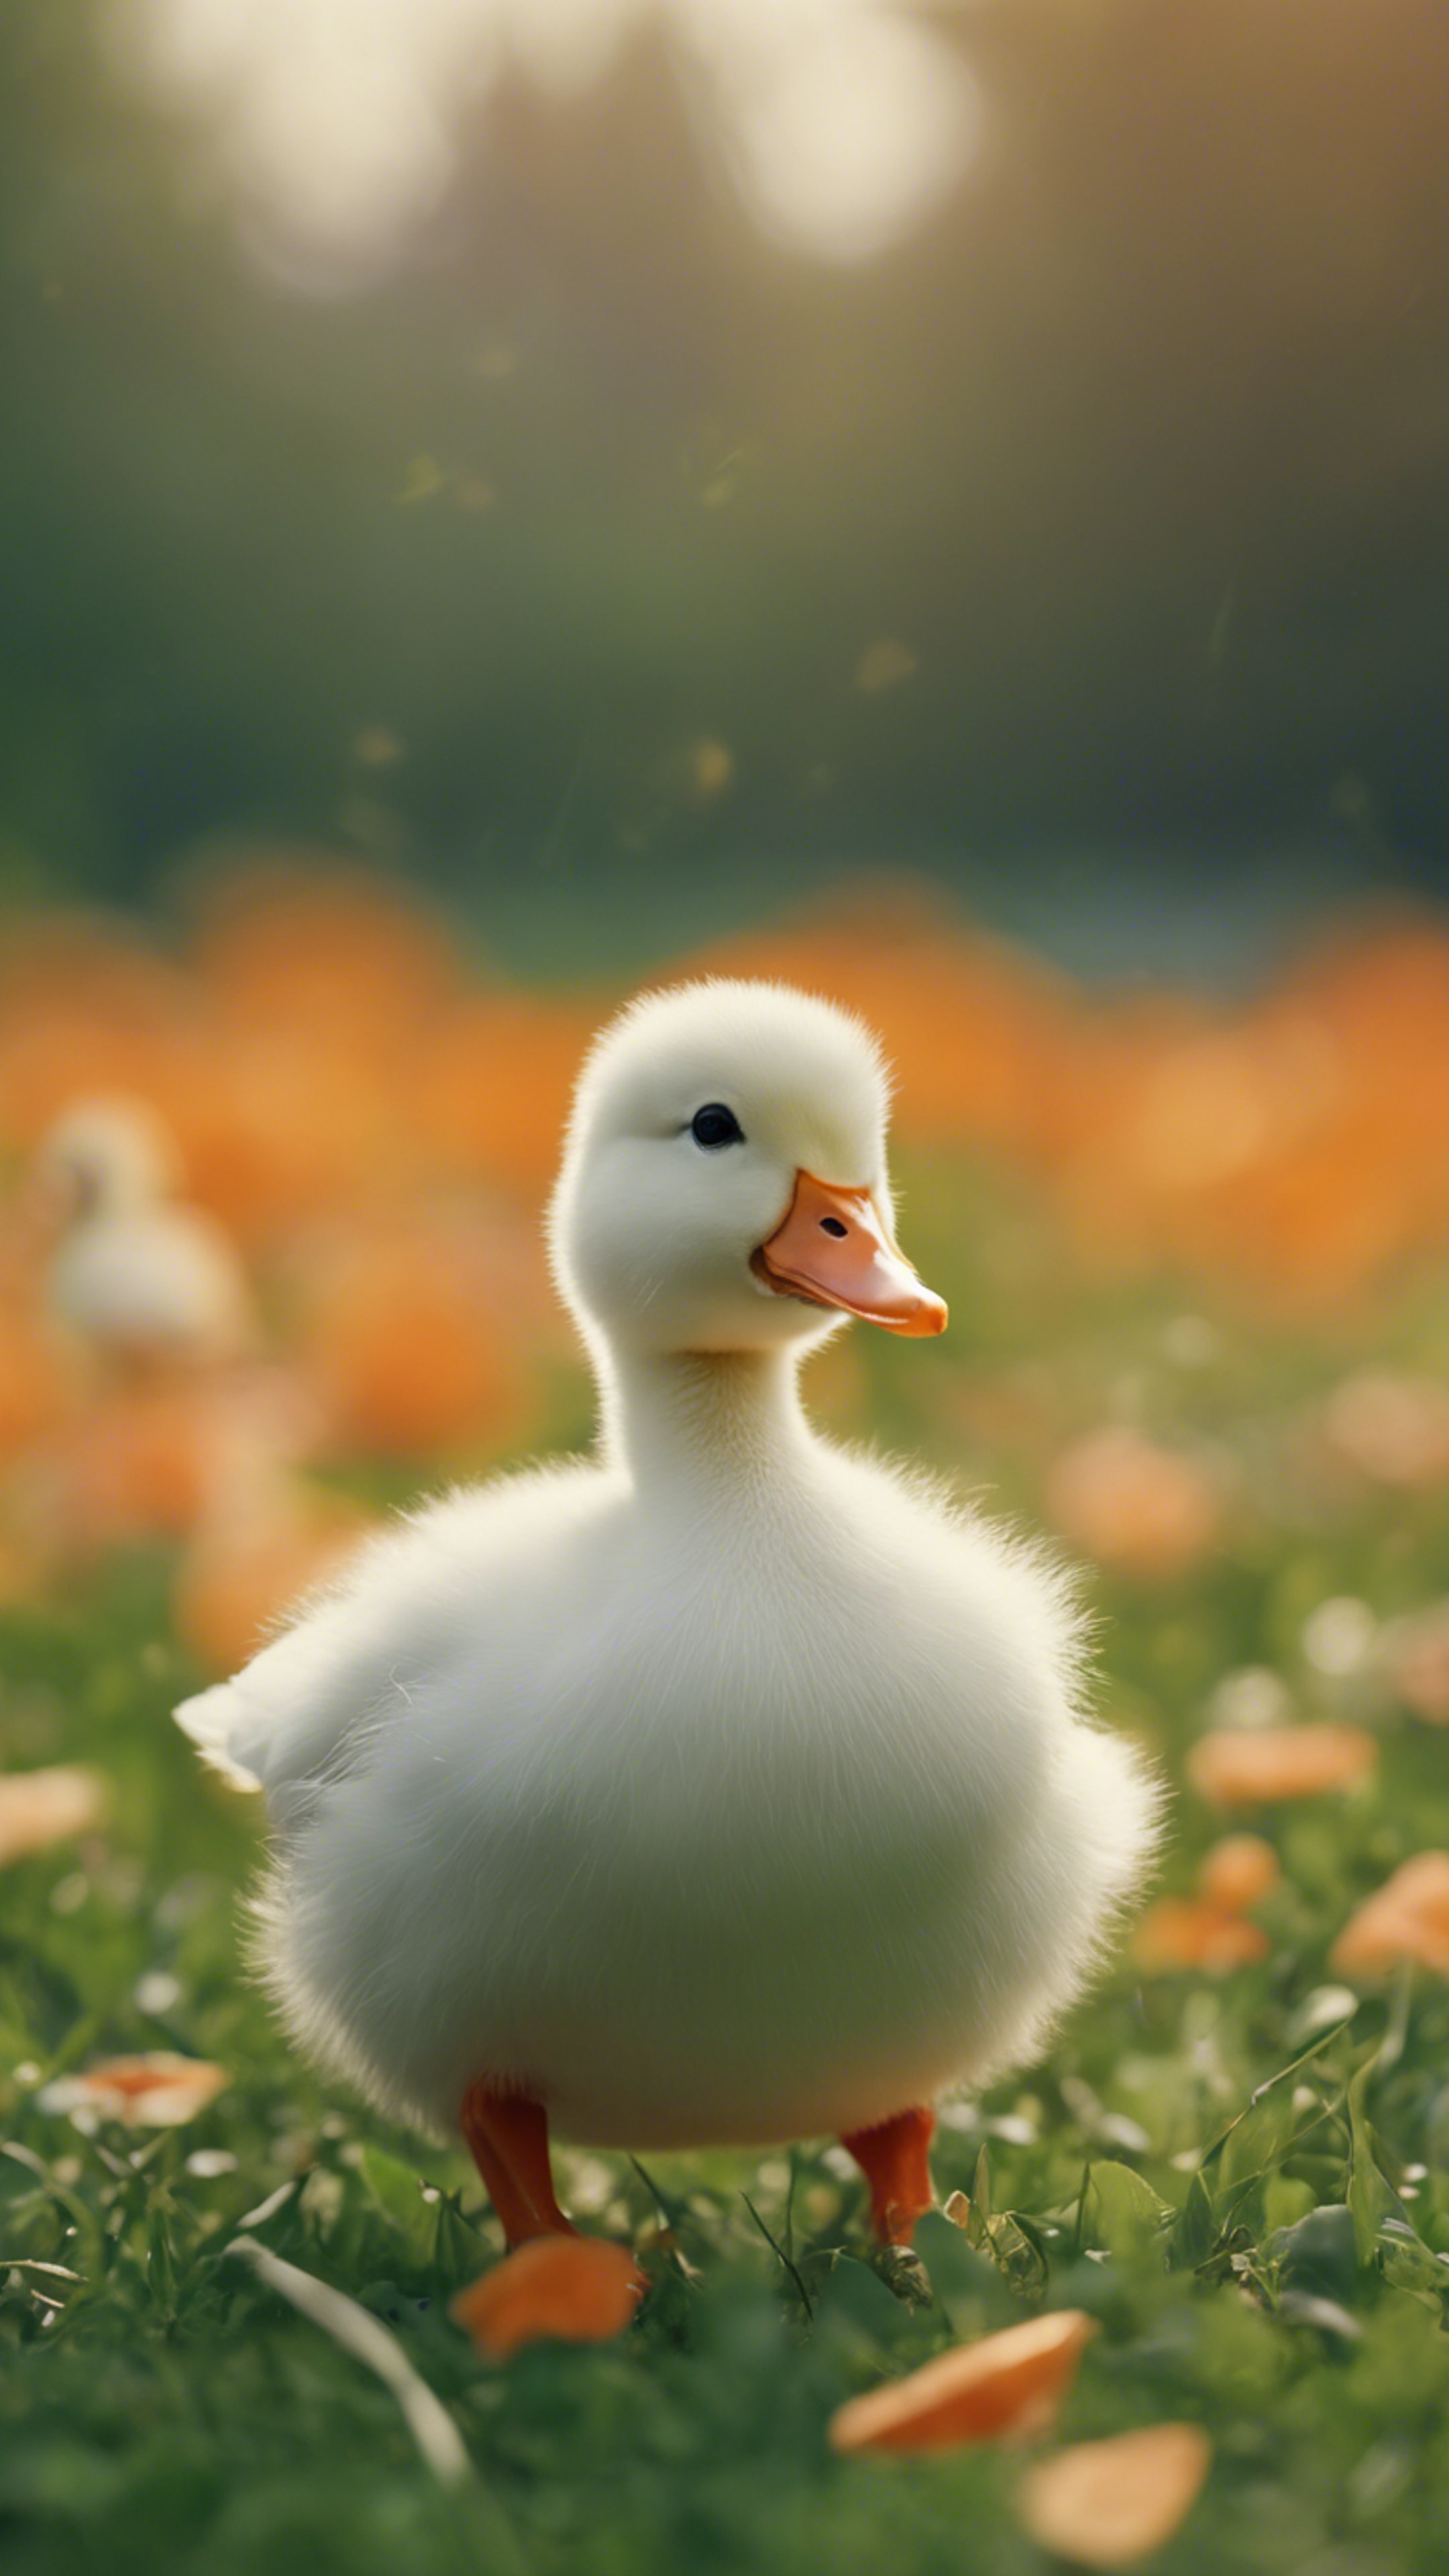 An adorable fluffy white duck with a bright orange bill is waddling happily across a green meadow. duvar kağıdı[c976b0c80c1040dead0f]